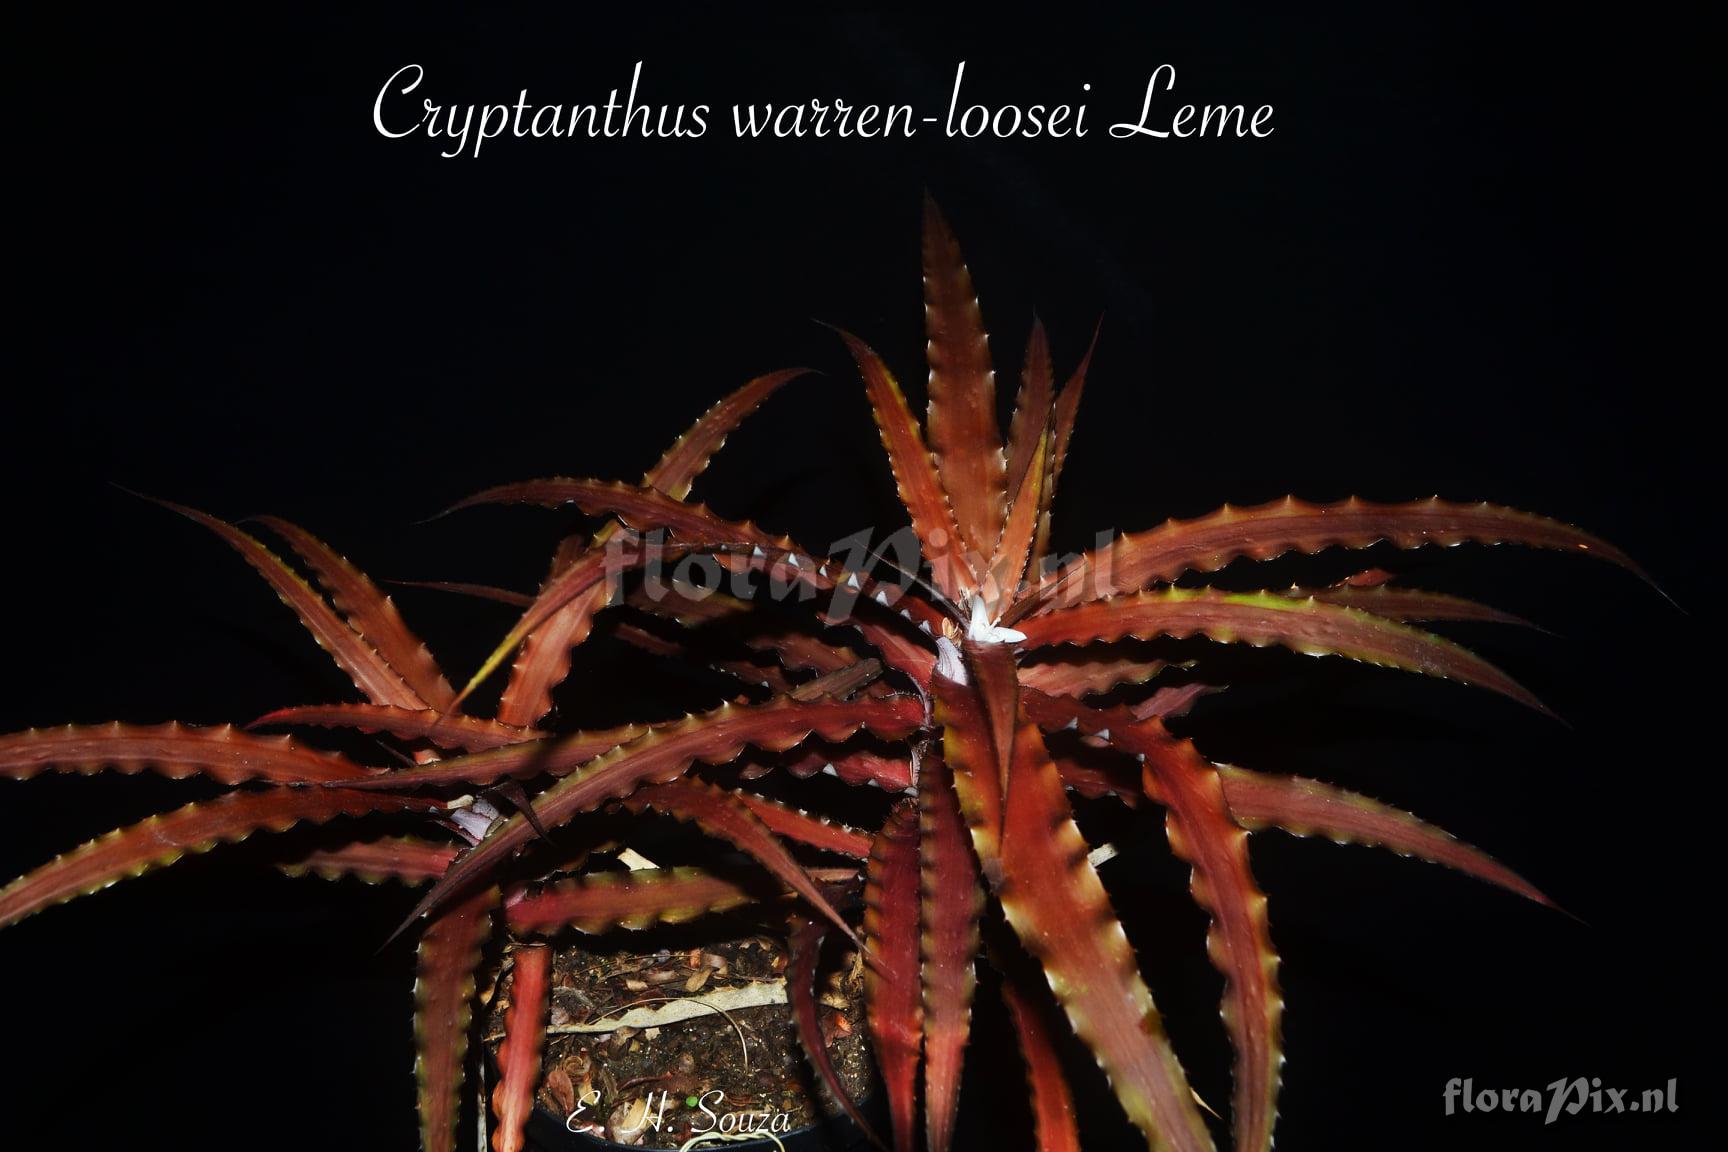 Cryptanthus warrenloosei